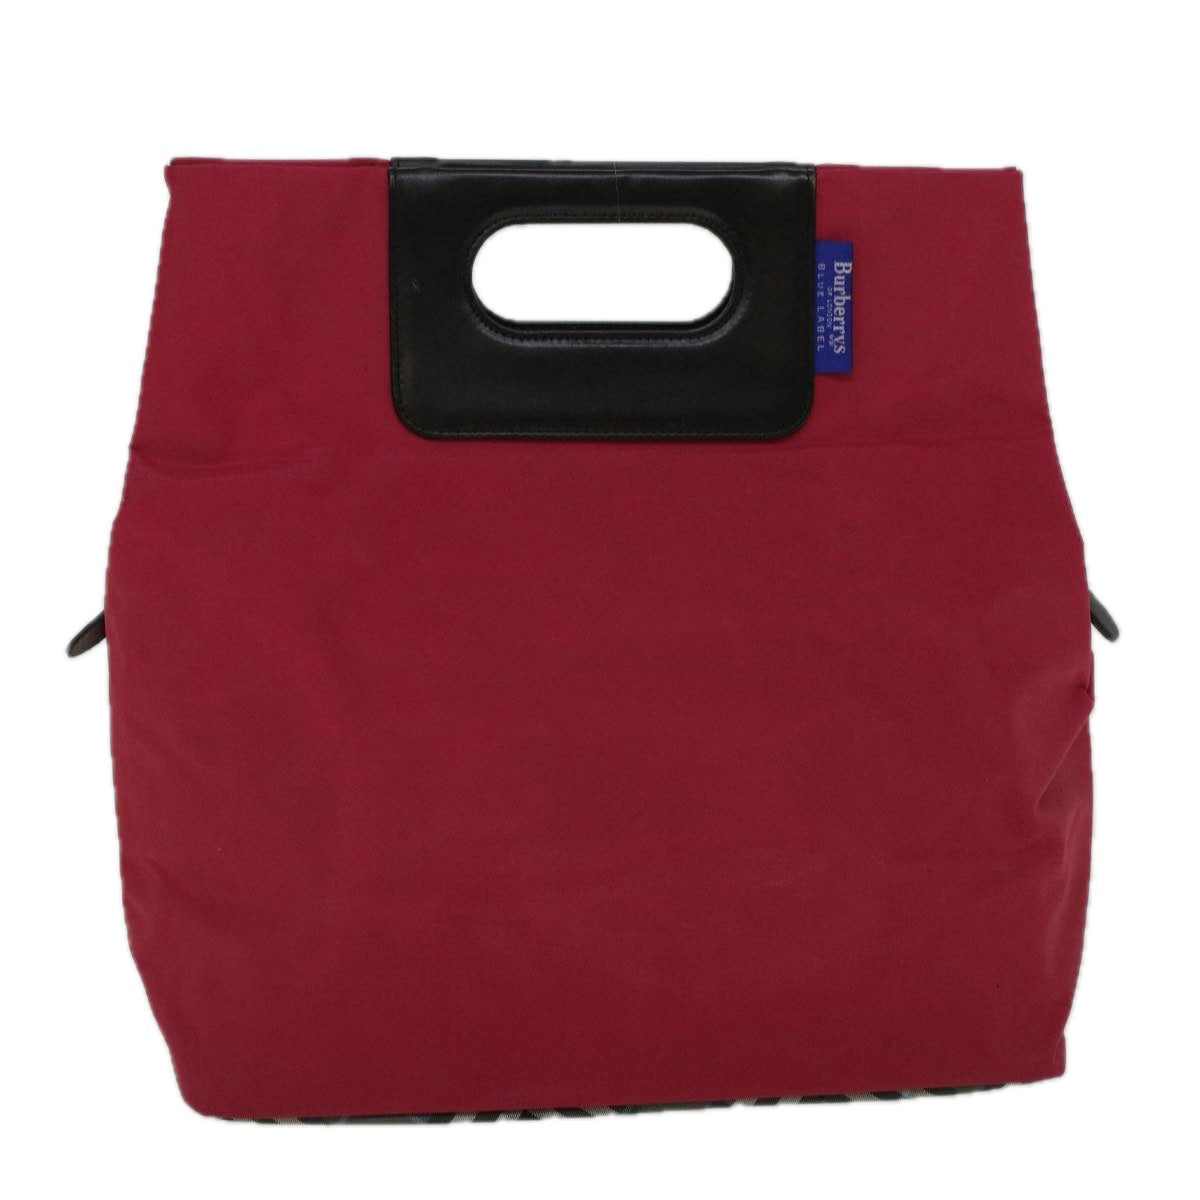 Burberrys Nova Check Blue Label Hand Bag Nylon Red Gray Auth bs8760